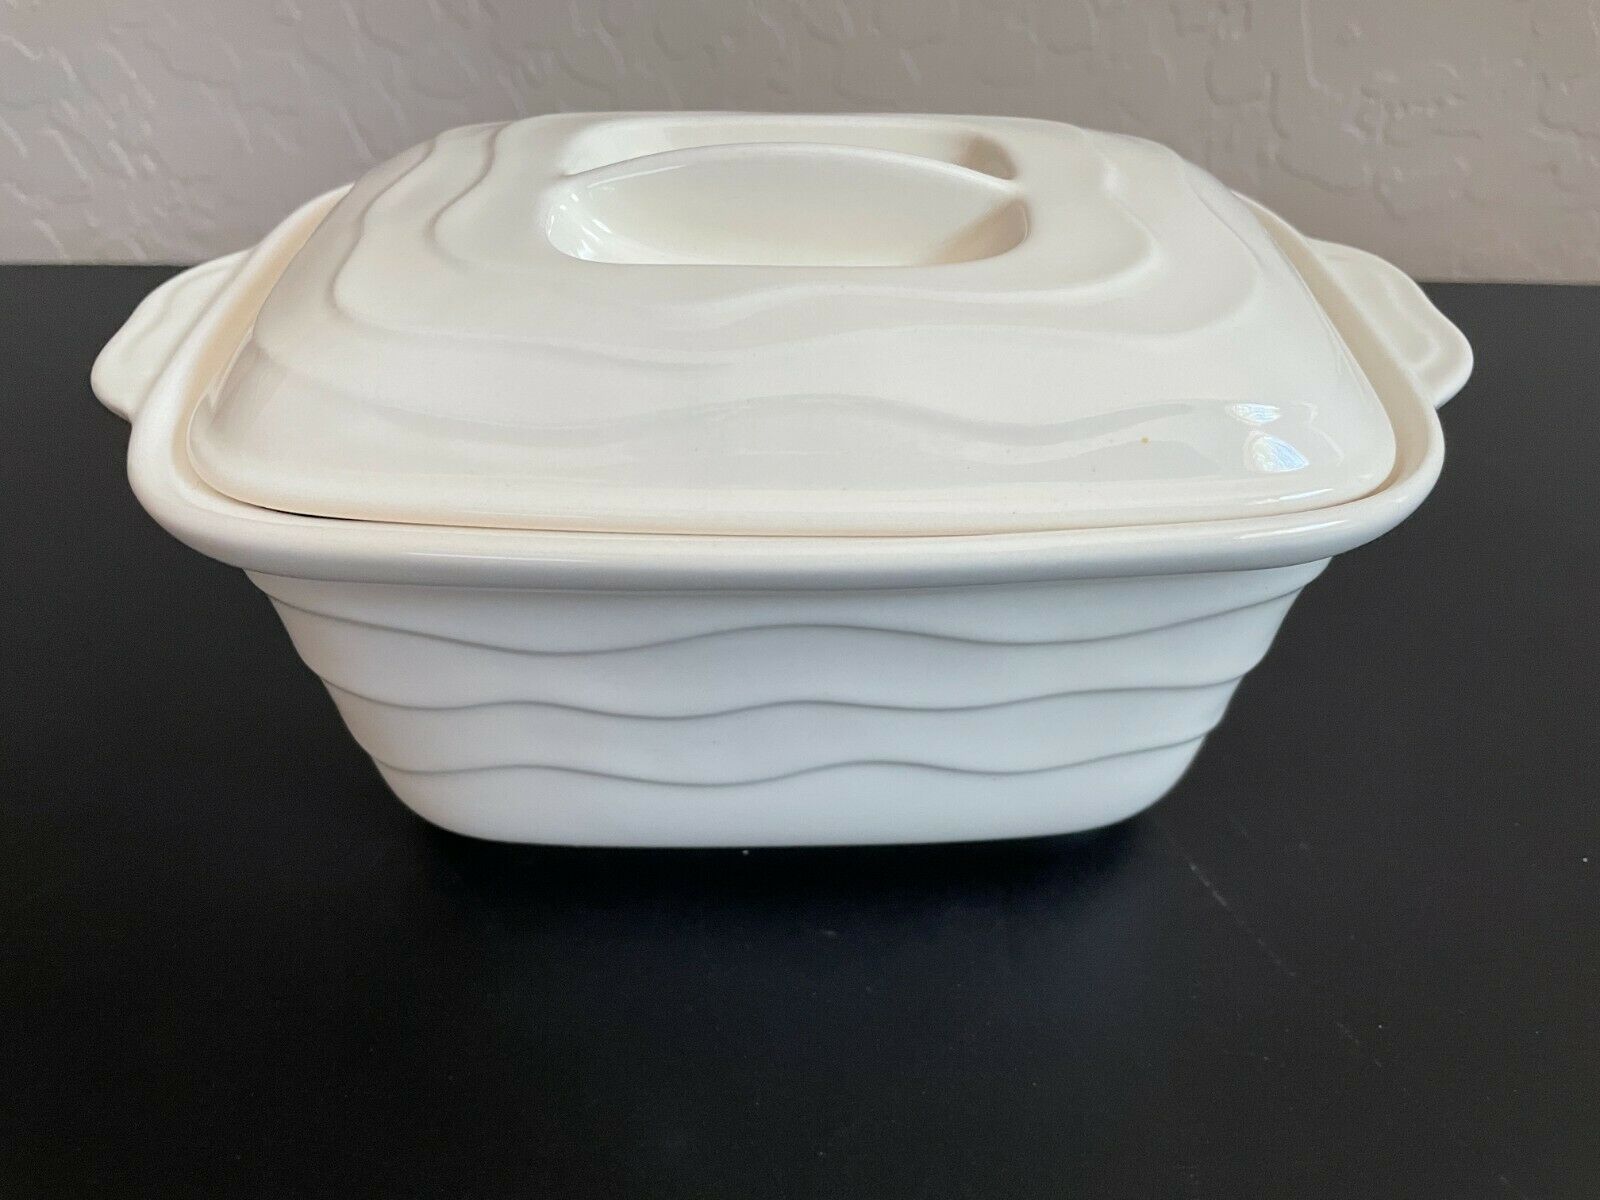 Ceramic White Refrigerator Dish With Lid